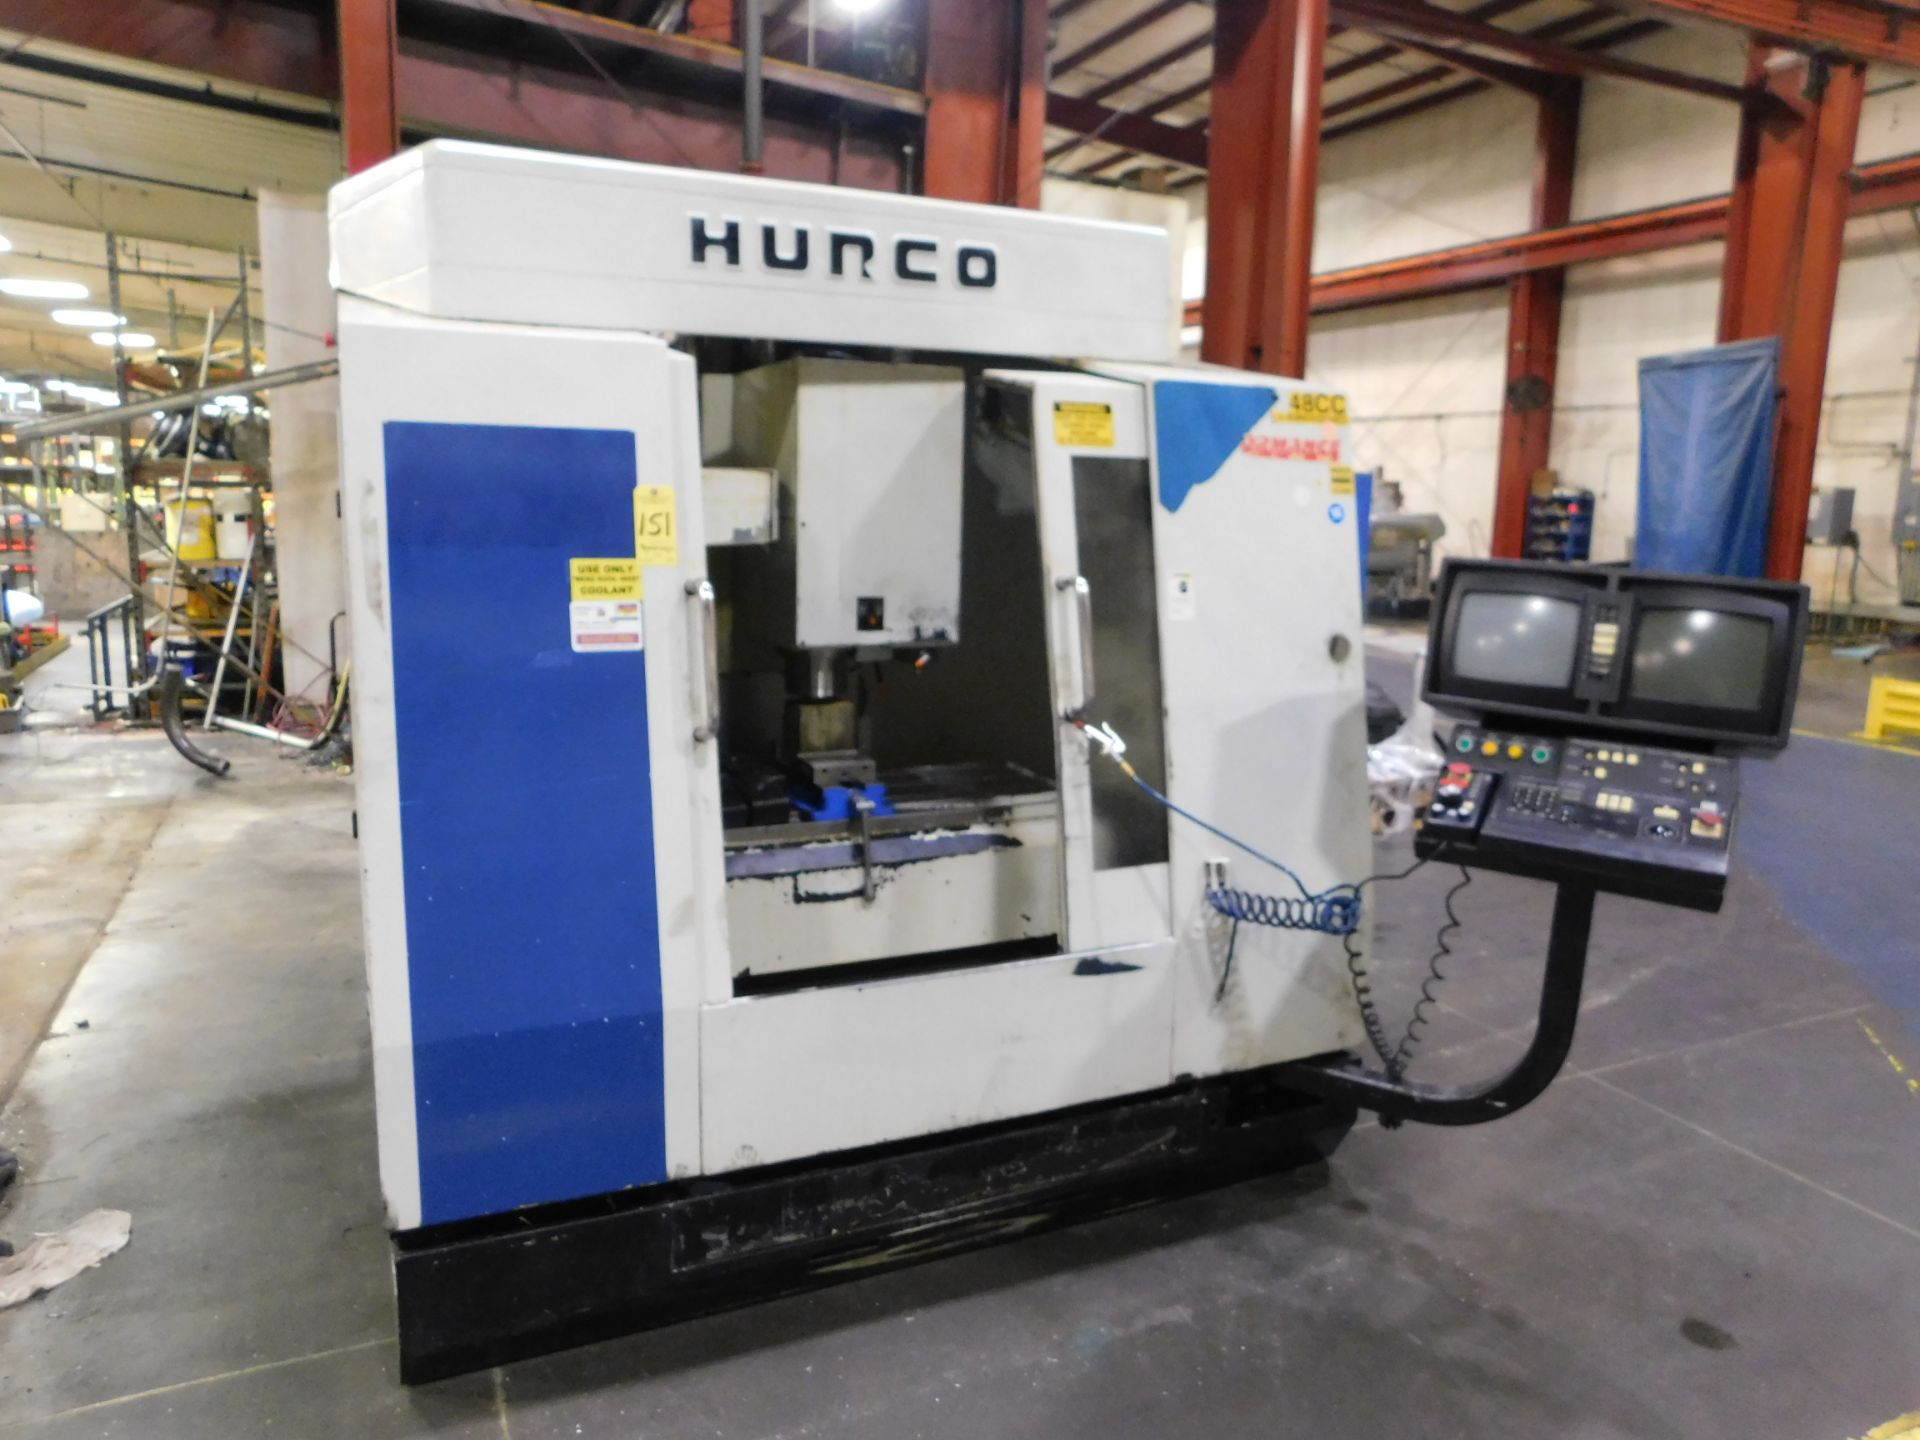 Hurco Model BMC-30M CNC Vertical Machining Center, Hurco CNC Control, 40 Taper, 24 ATC, 8,000 RPM, - Image 2 of 4